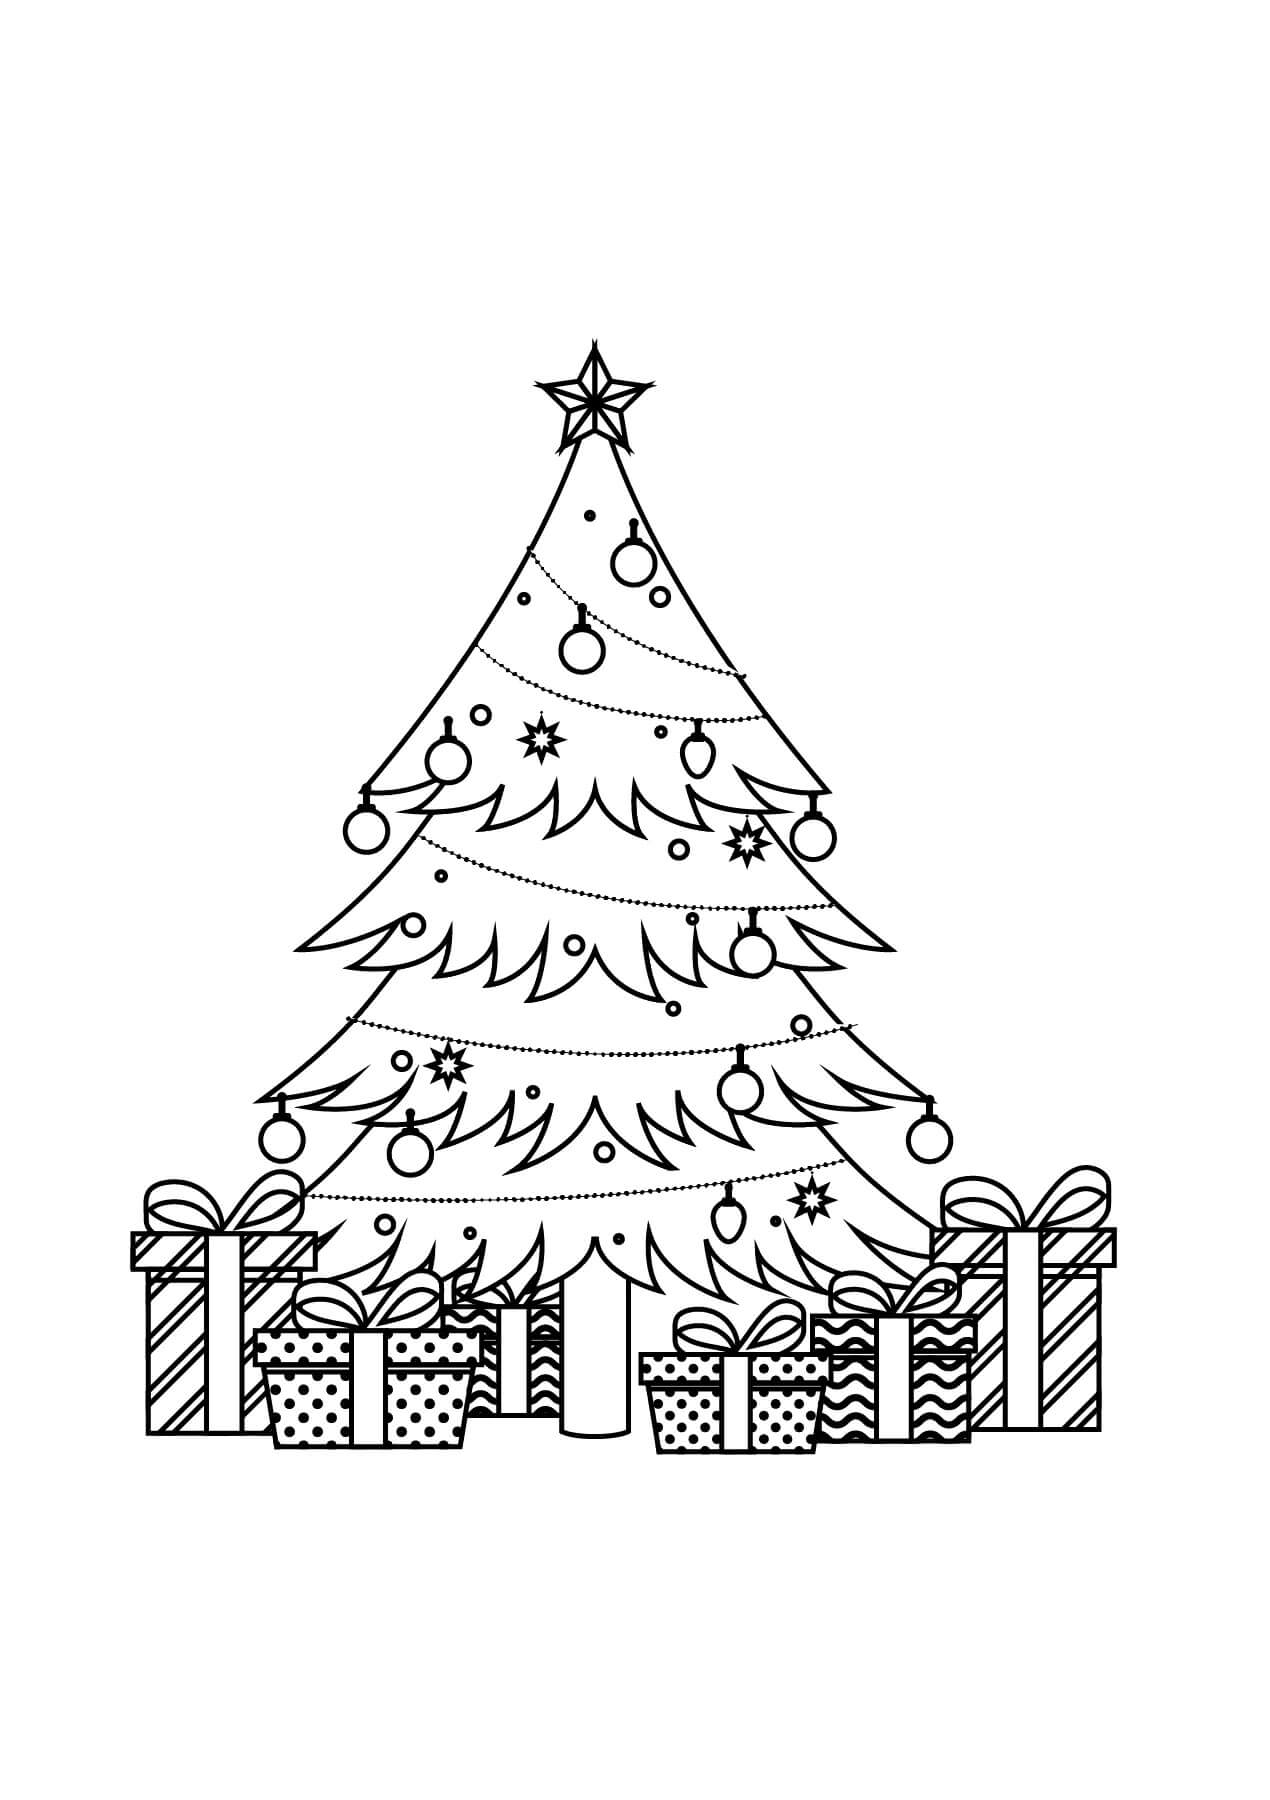 Desenhos de Presentes Debaixo da Árvore de Natal para colorir